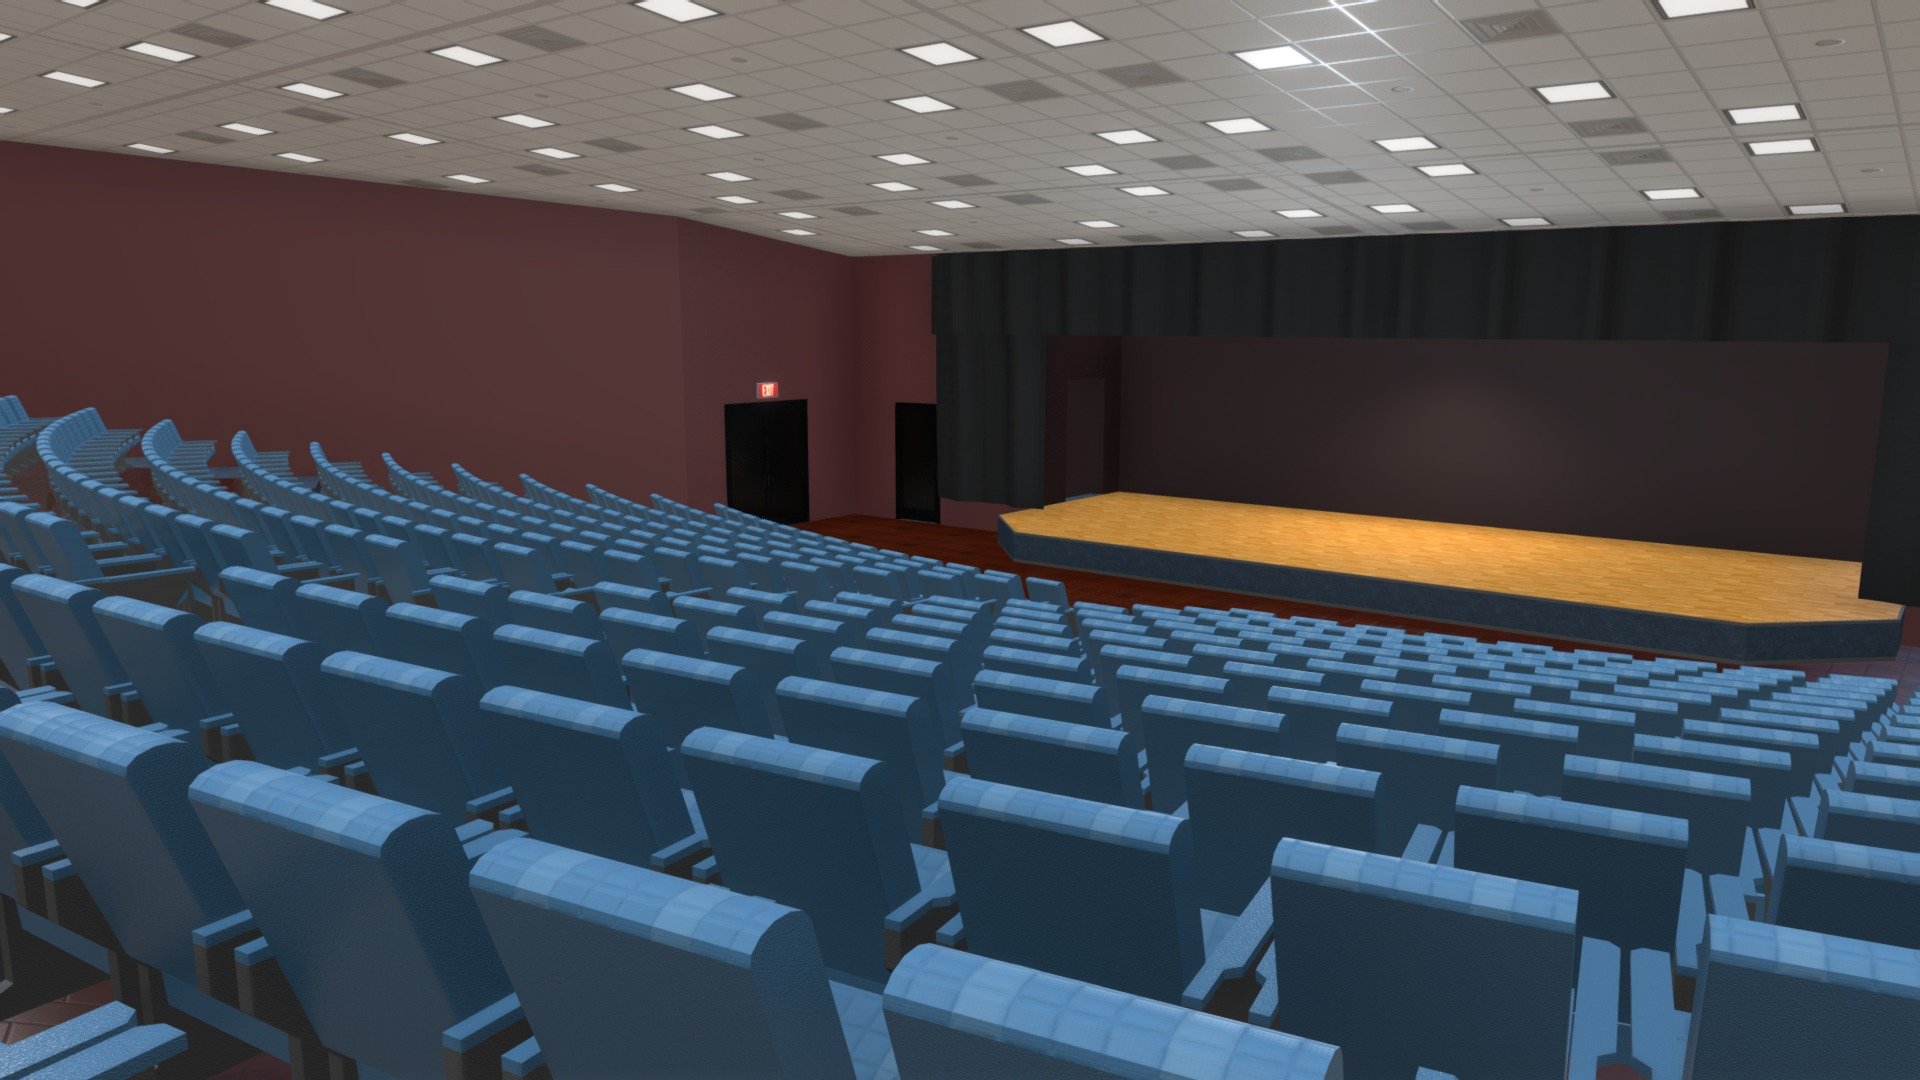 Theater Cinema Auditorium Playhouse Concert Hall Stage and Seating - Theater Cinema Auditorium (Style 2 of 2) - Buy Royalty Free 3D model by jimbogies 3d model